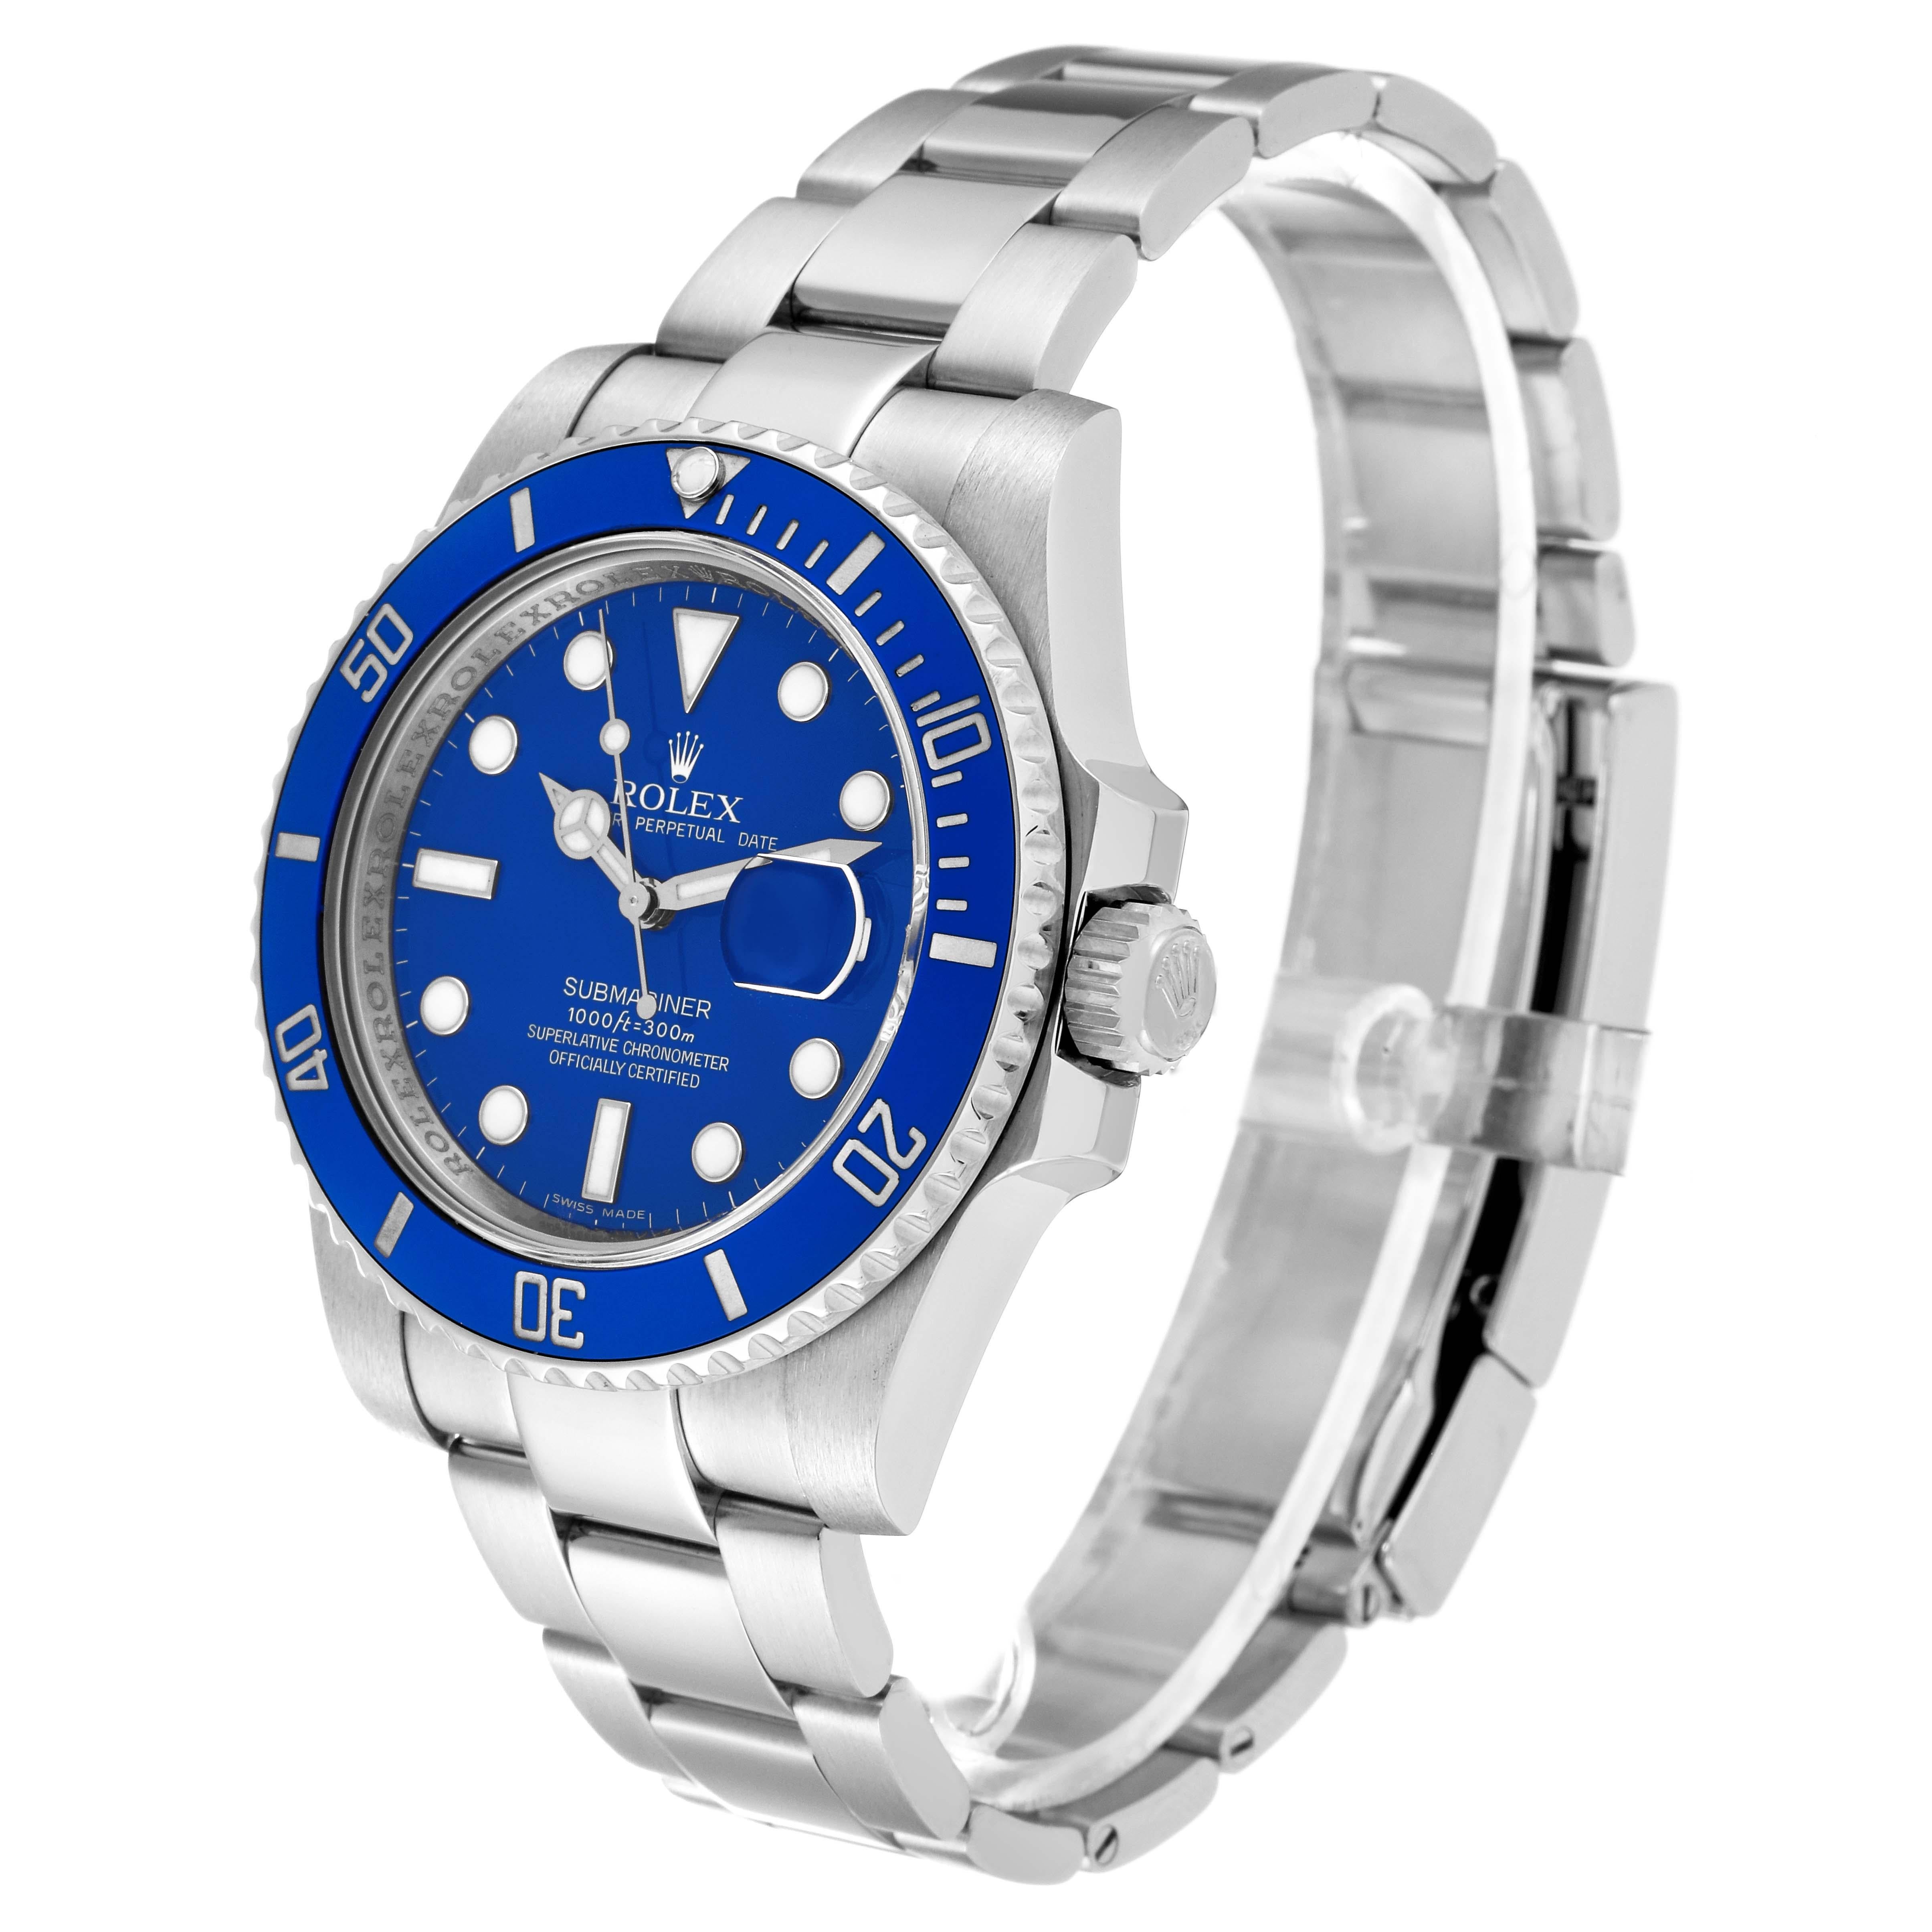 Men's Rolex Submariner White Gold Blue Dial Ceramic Bezel Mens Watch 116619